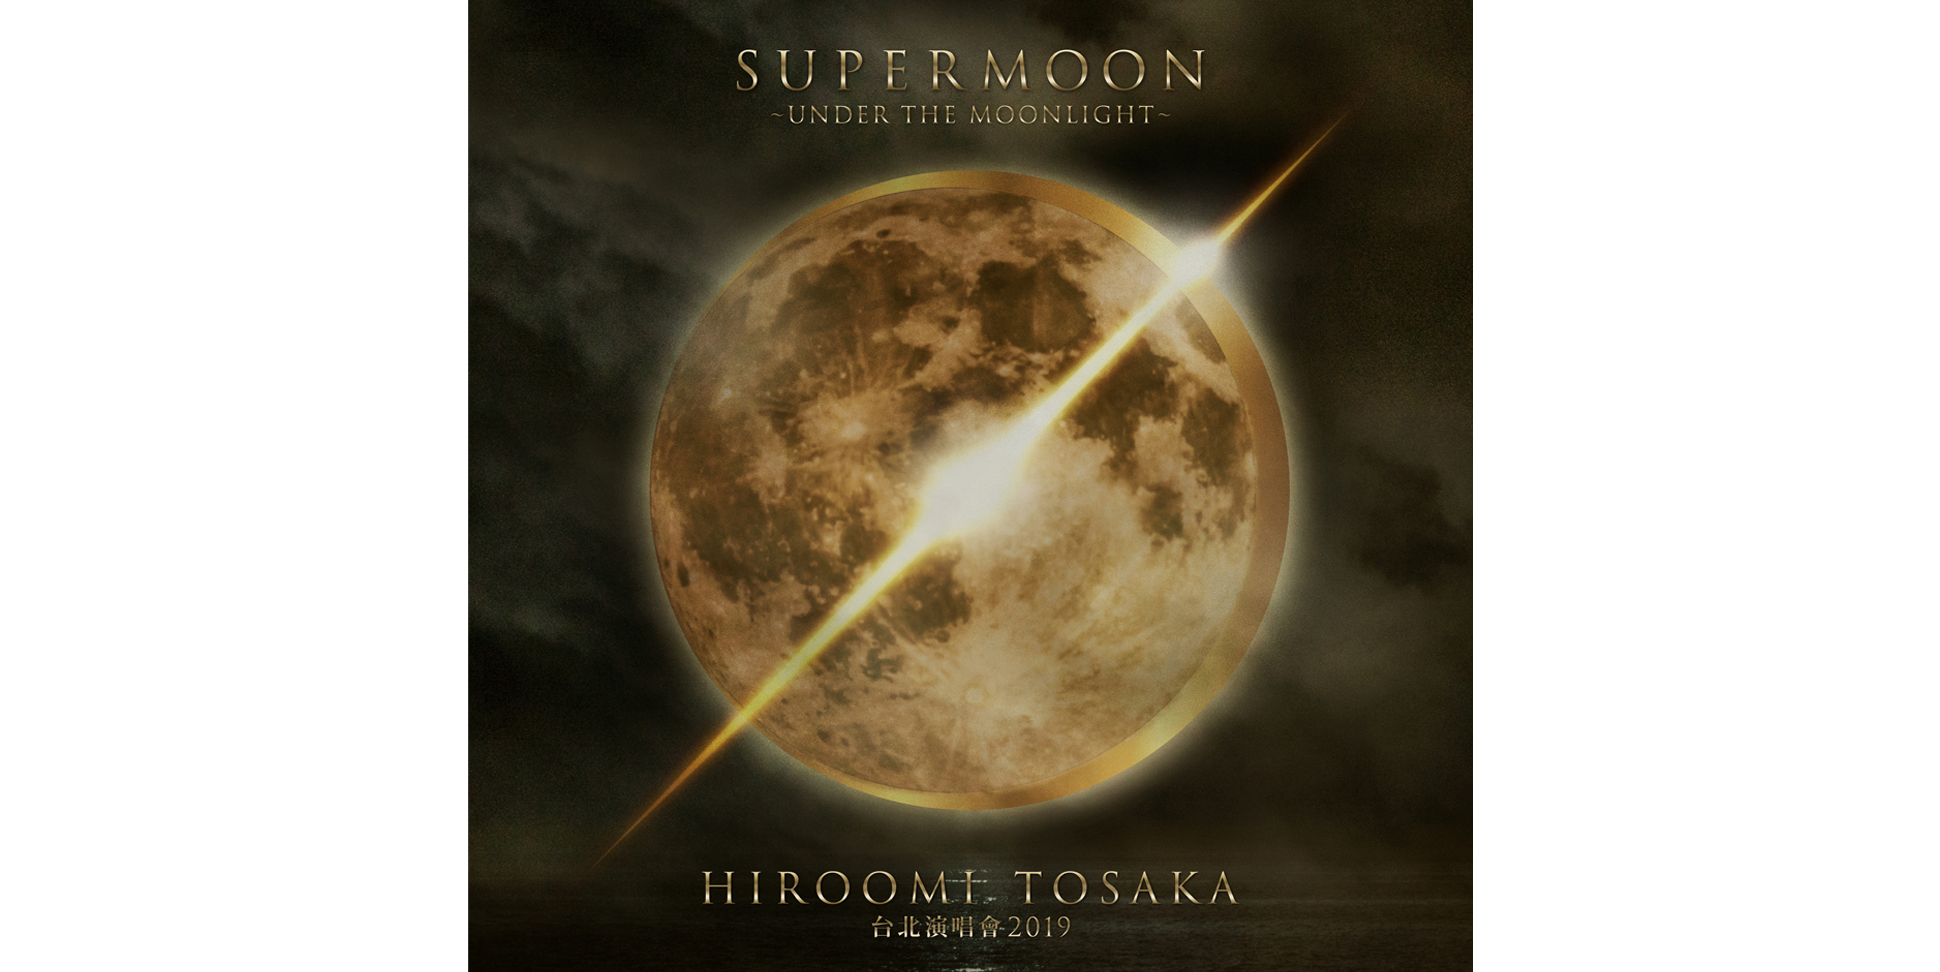 HIROOMI TOSAKA 台北演唱會 2019 SUPERMOON<br> ～UNDER THE MOONLIGHT～<br>チケット付・チケットなし<br>JTBオフィシャルツアー